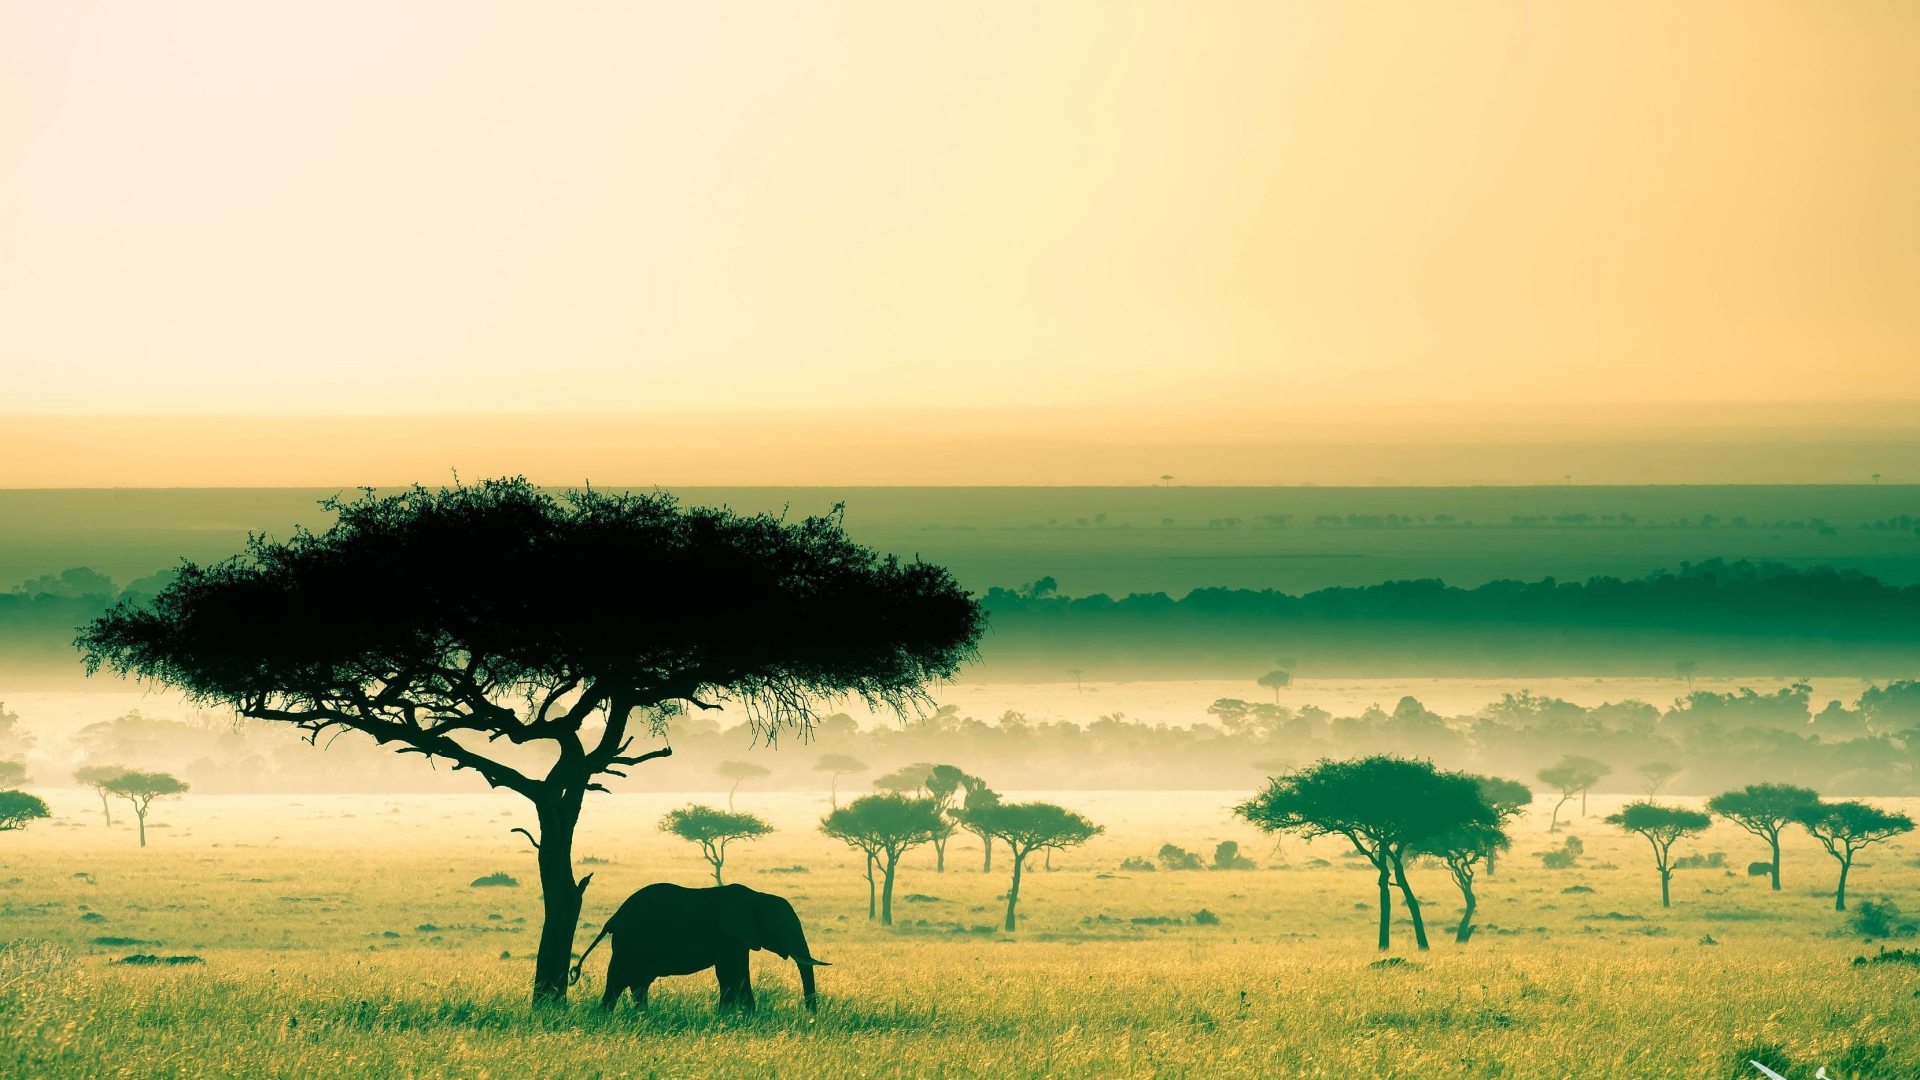 An elephant under a tree, Africa